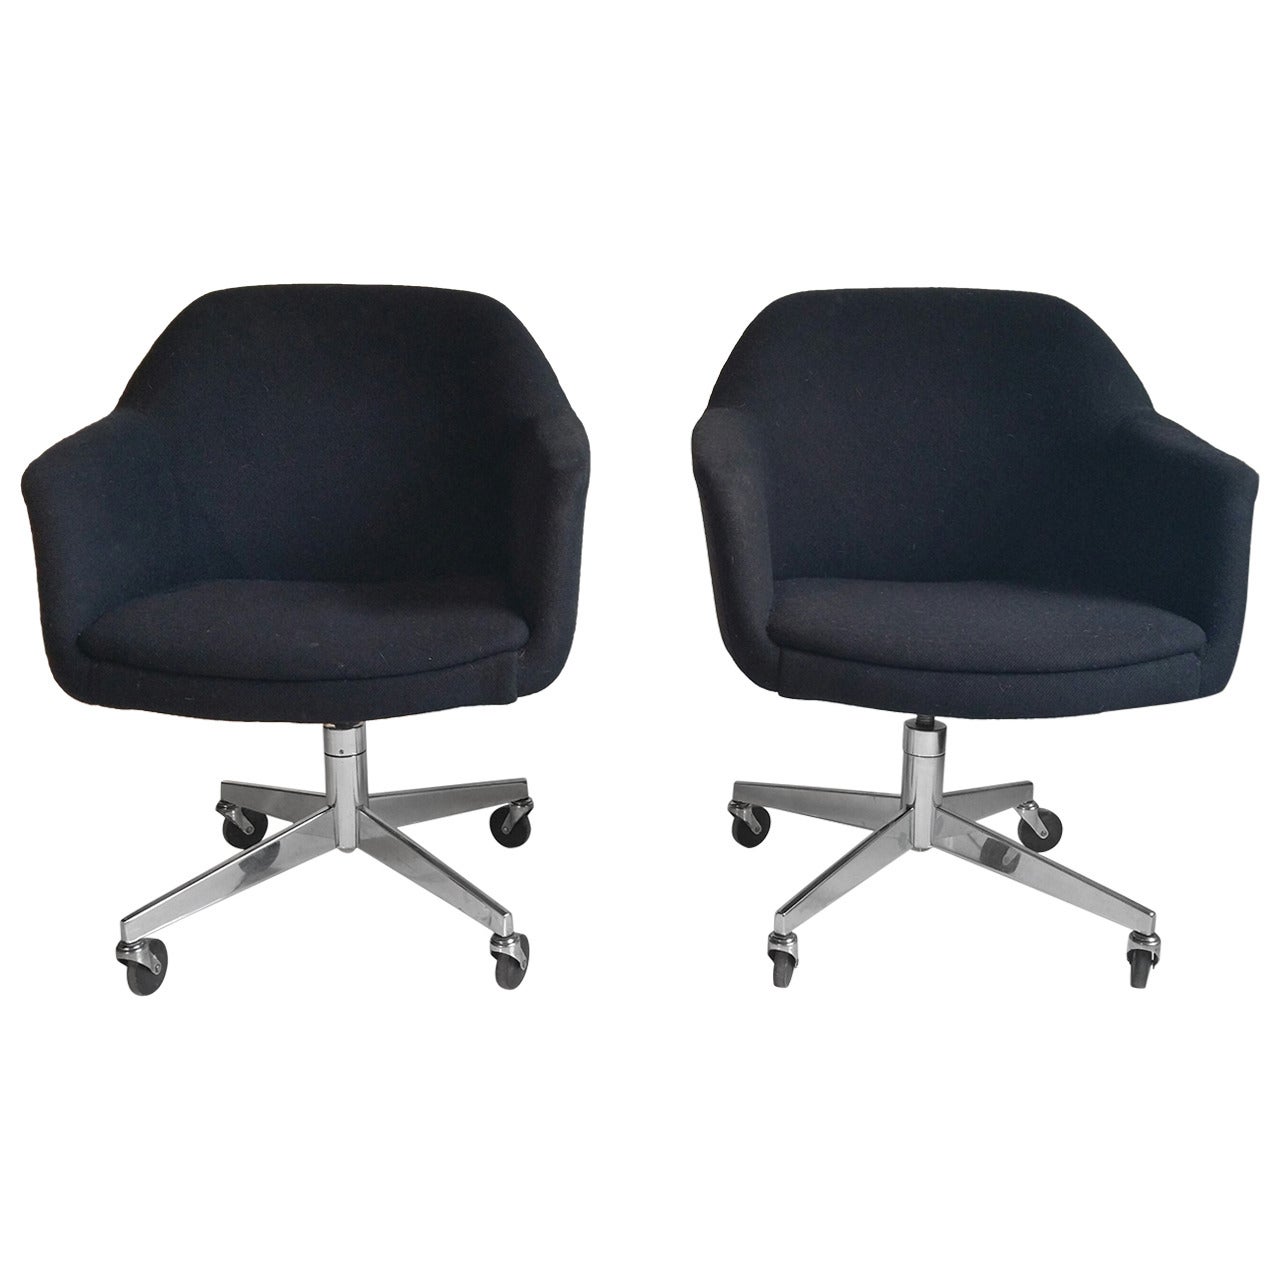 Pair of Mid-Century Modern Tilt Swivel Desk Chairs by Steelcase